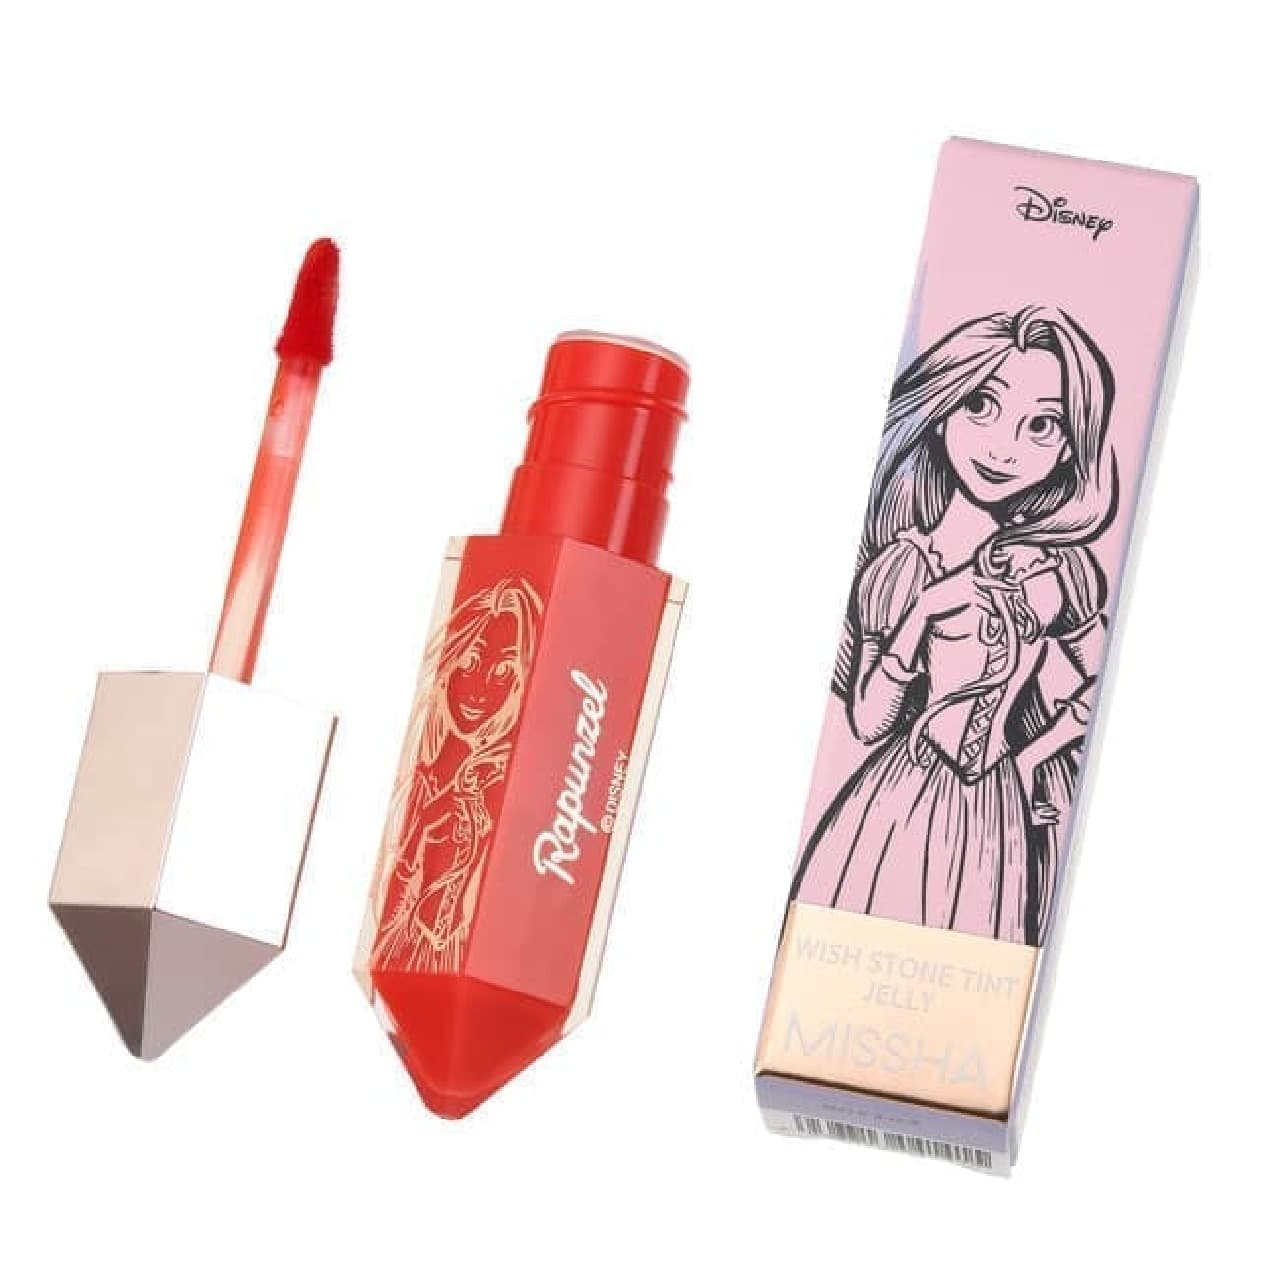 Disney Store collaborates with Korean cosmetics "MISSHA" --Princess-designed foundation, lip tint, etc.